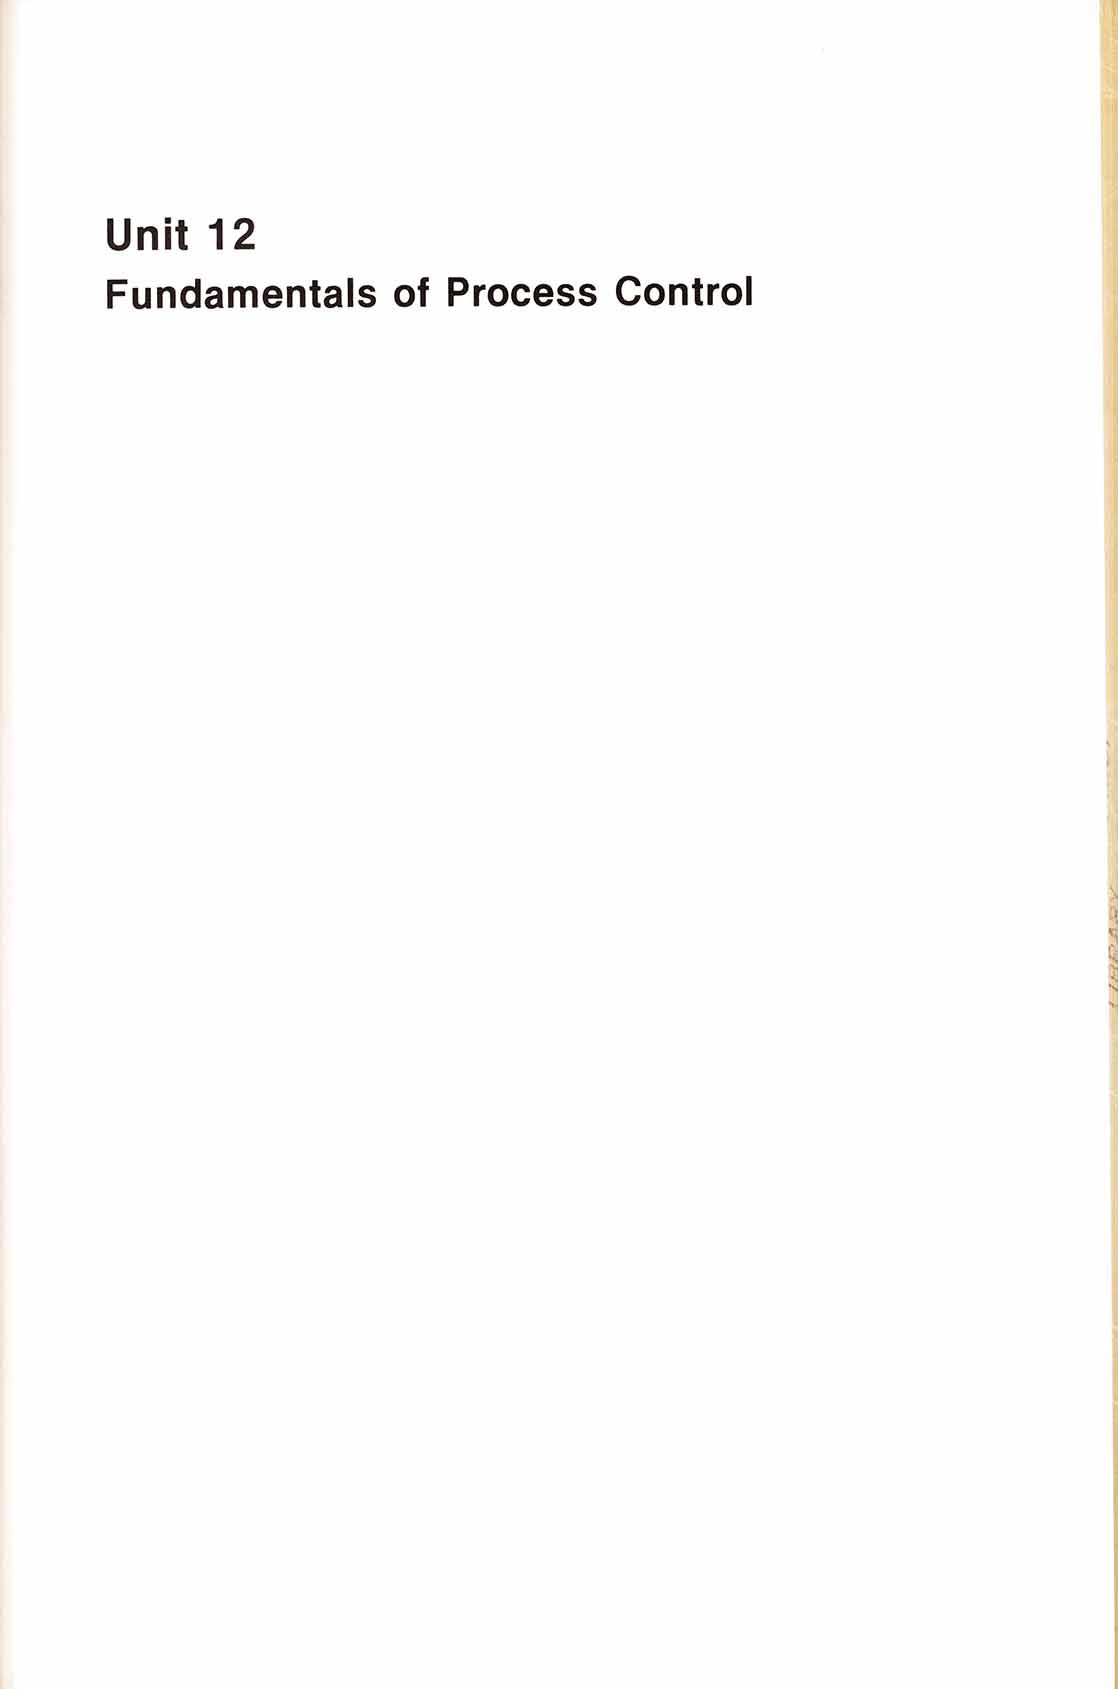 Instrumentation and control [Volume 2 - unit 12-14]